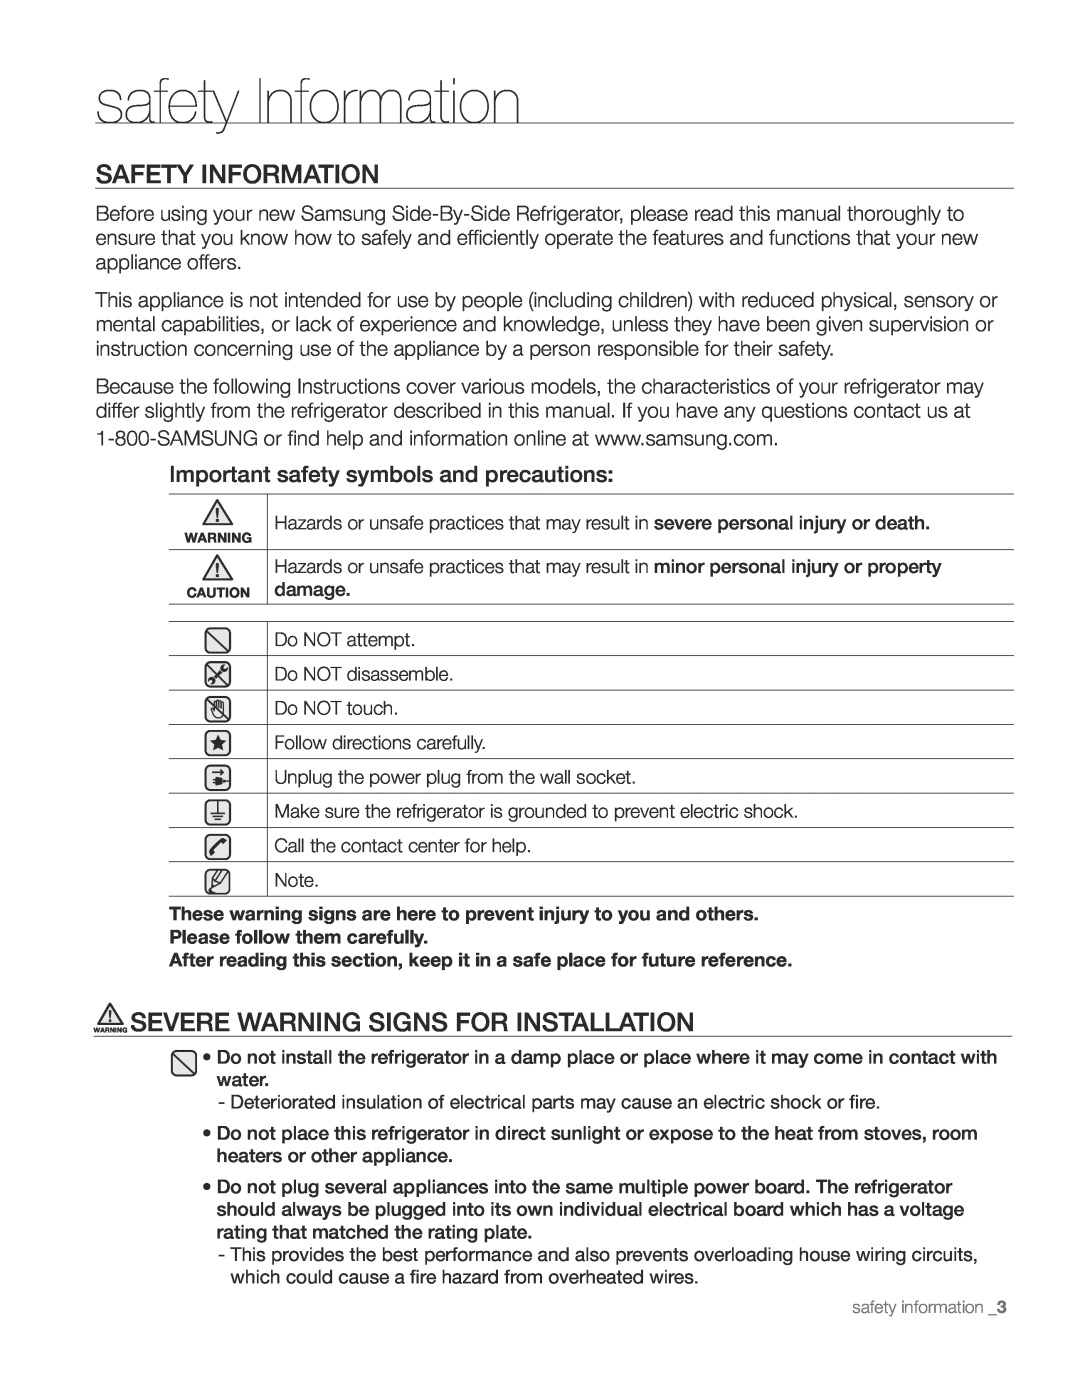 Samsung RS261M** user manual safety Information, Safety Information, Warning Severe Warning Signs For Installation 